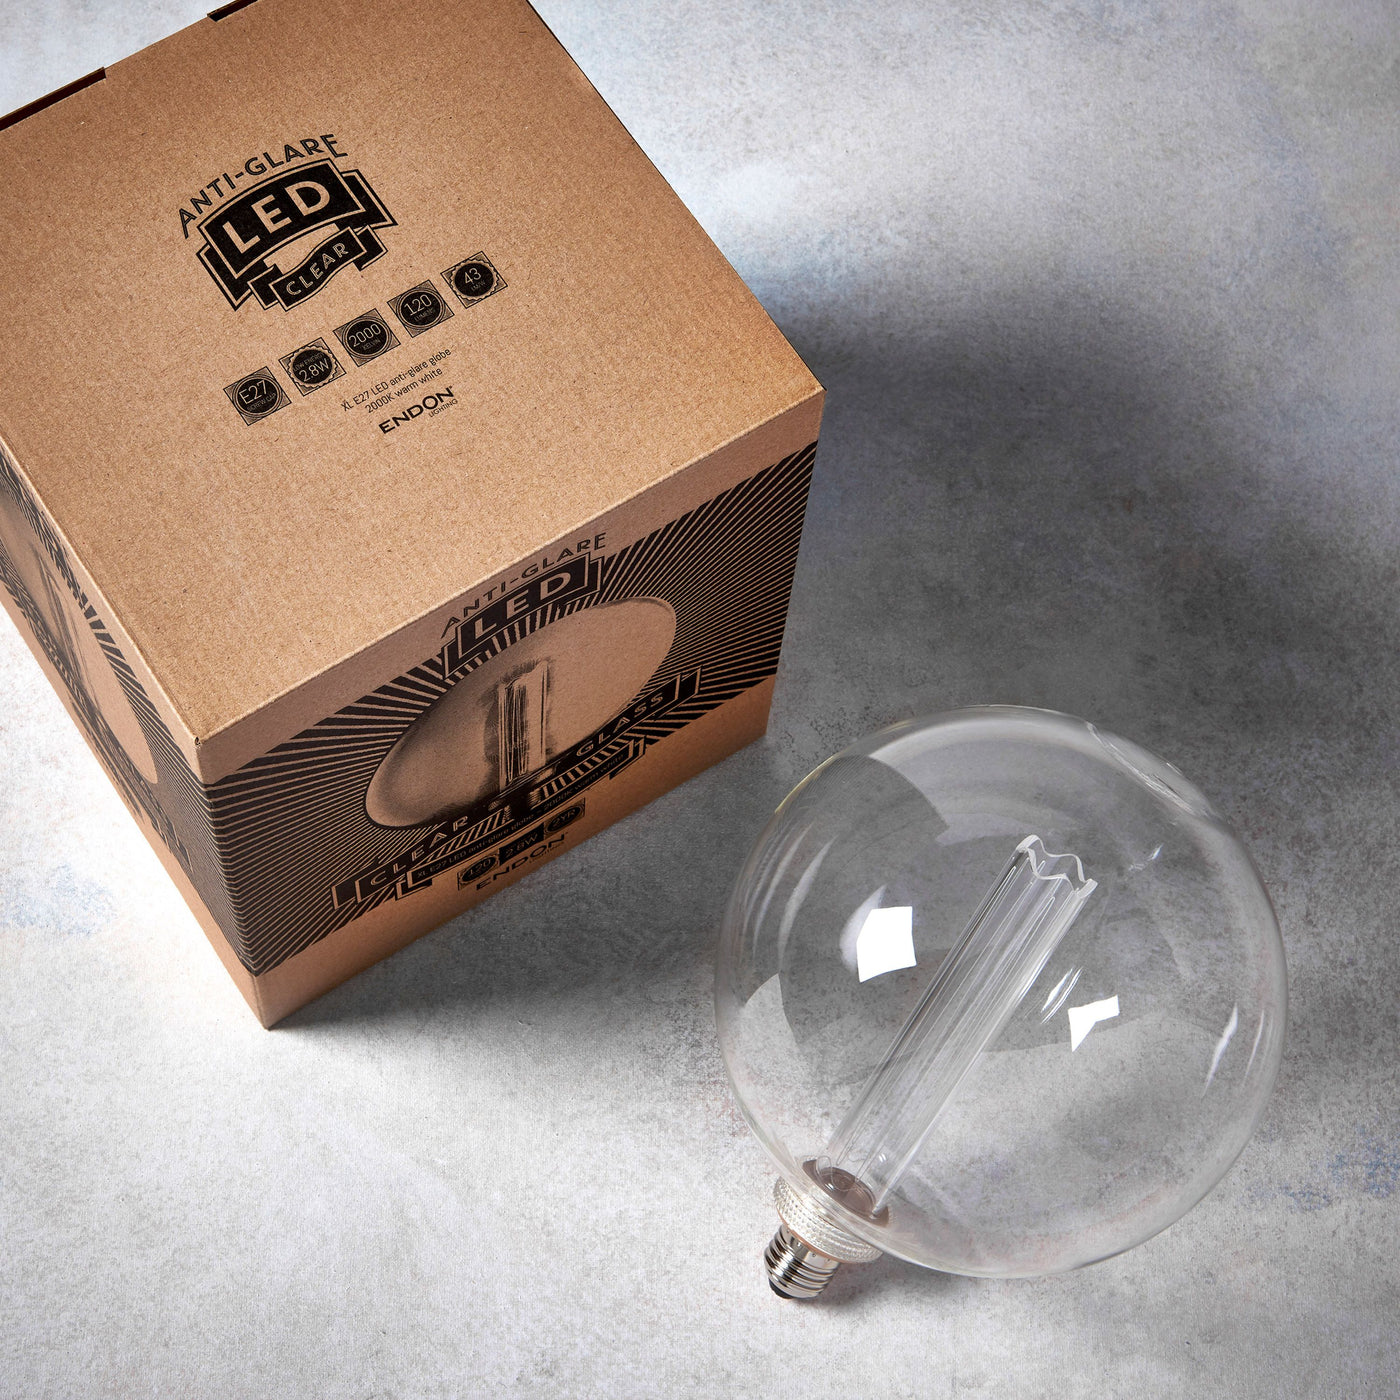 Carmarthen Bulb Clear Glass